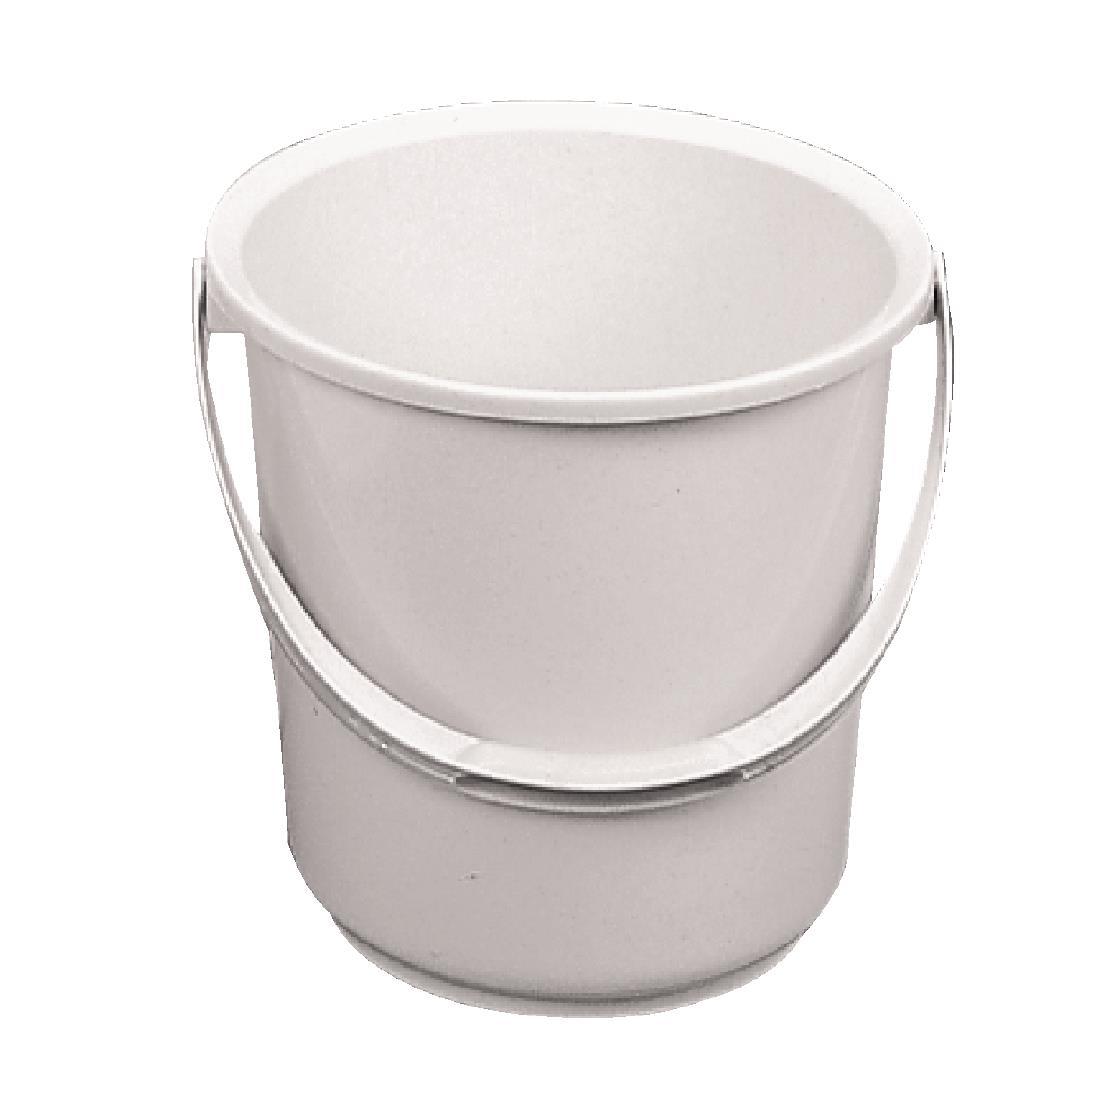 Jantex Plastic Bucket White 8Ltr - L573  - 1